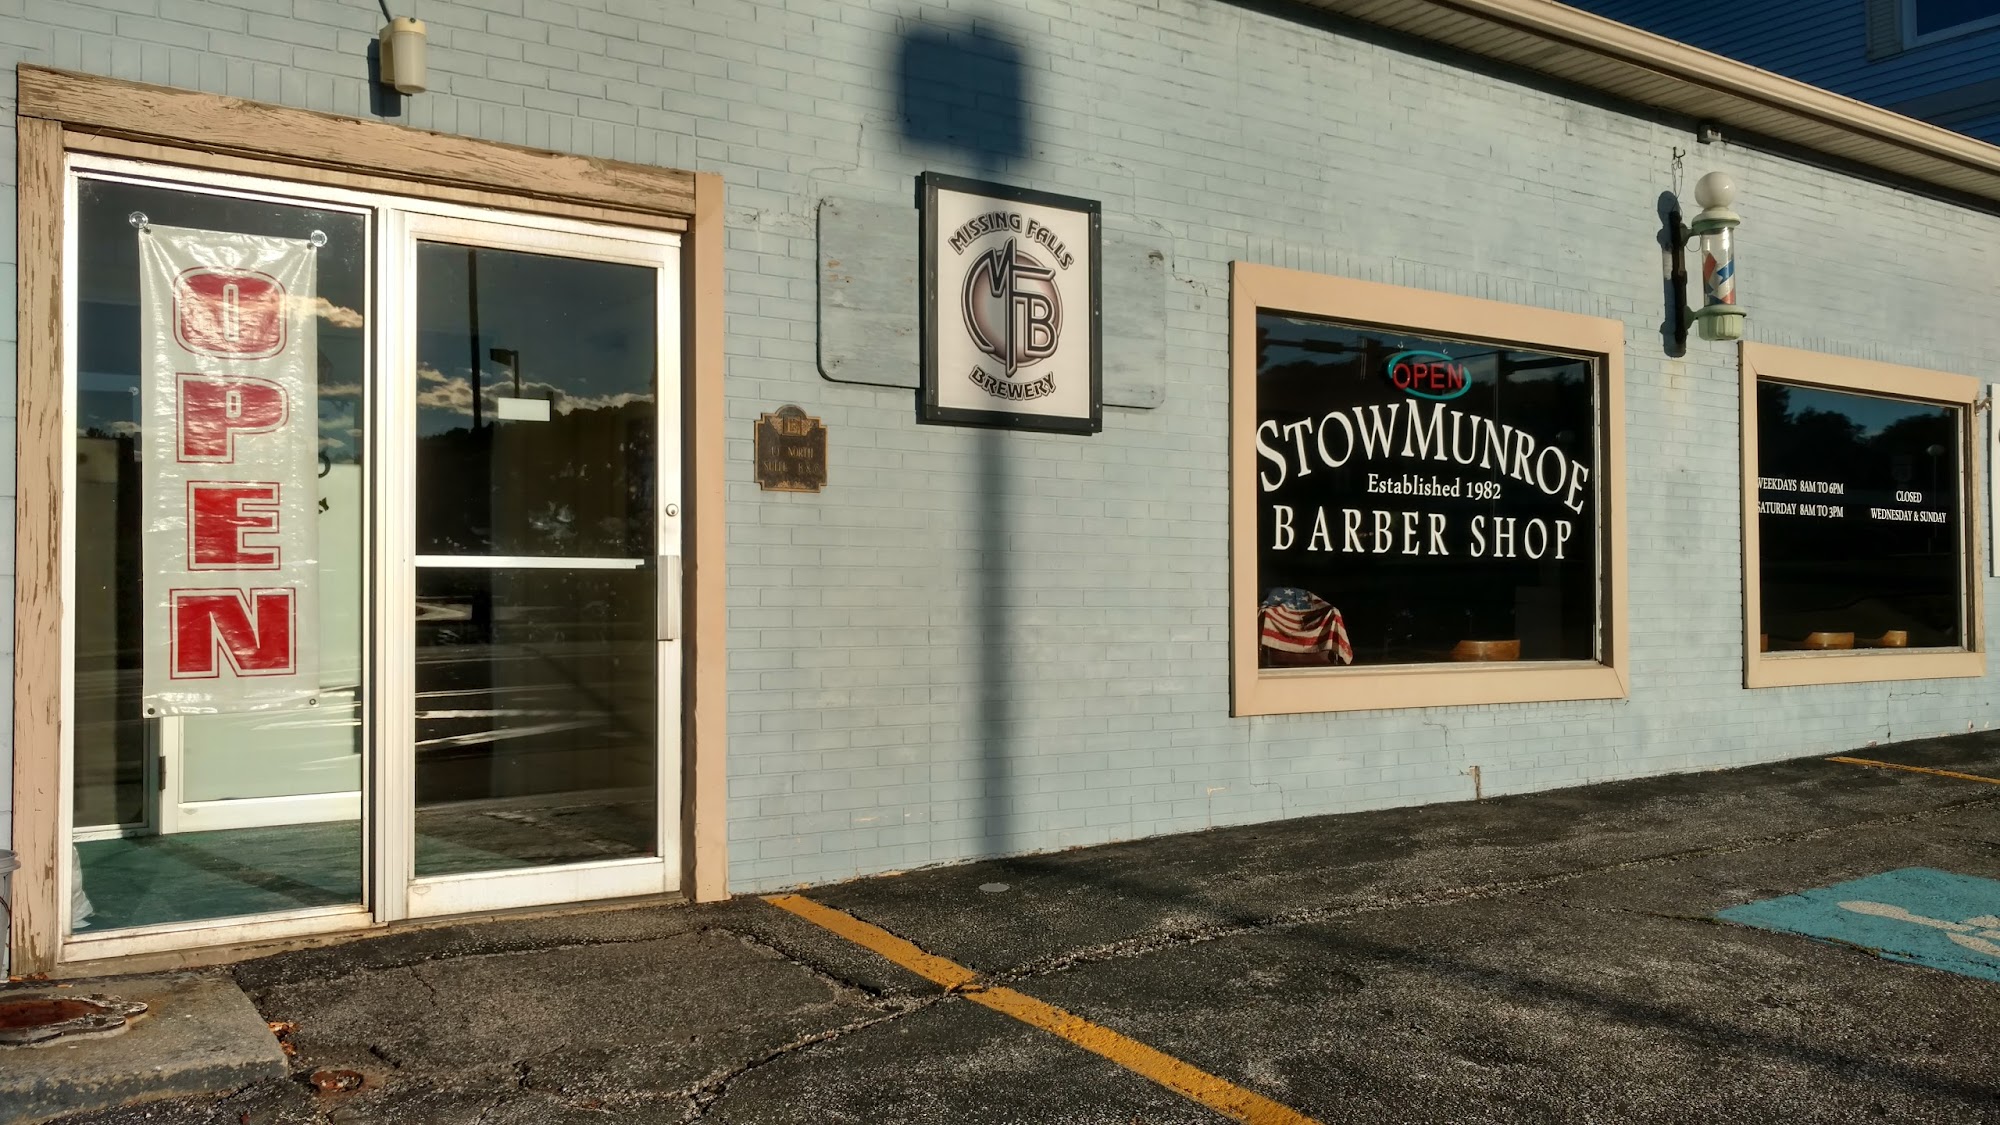 The Stow - Munroe Barber Shop 10 N Main St, Munroe Falls Ohio 44262